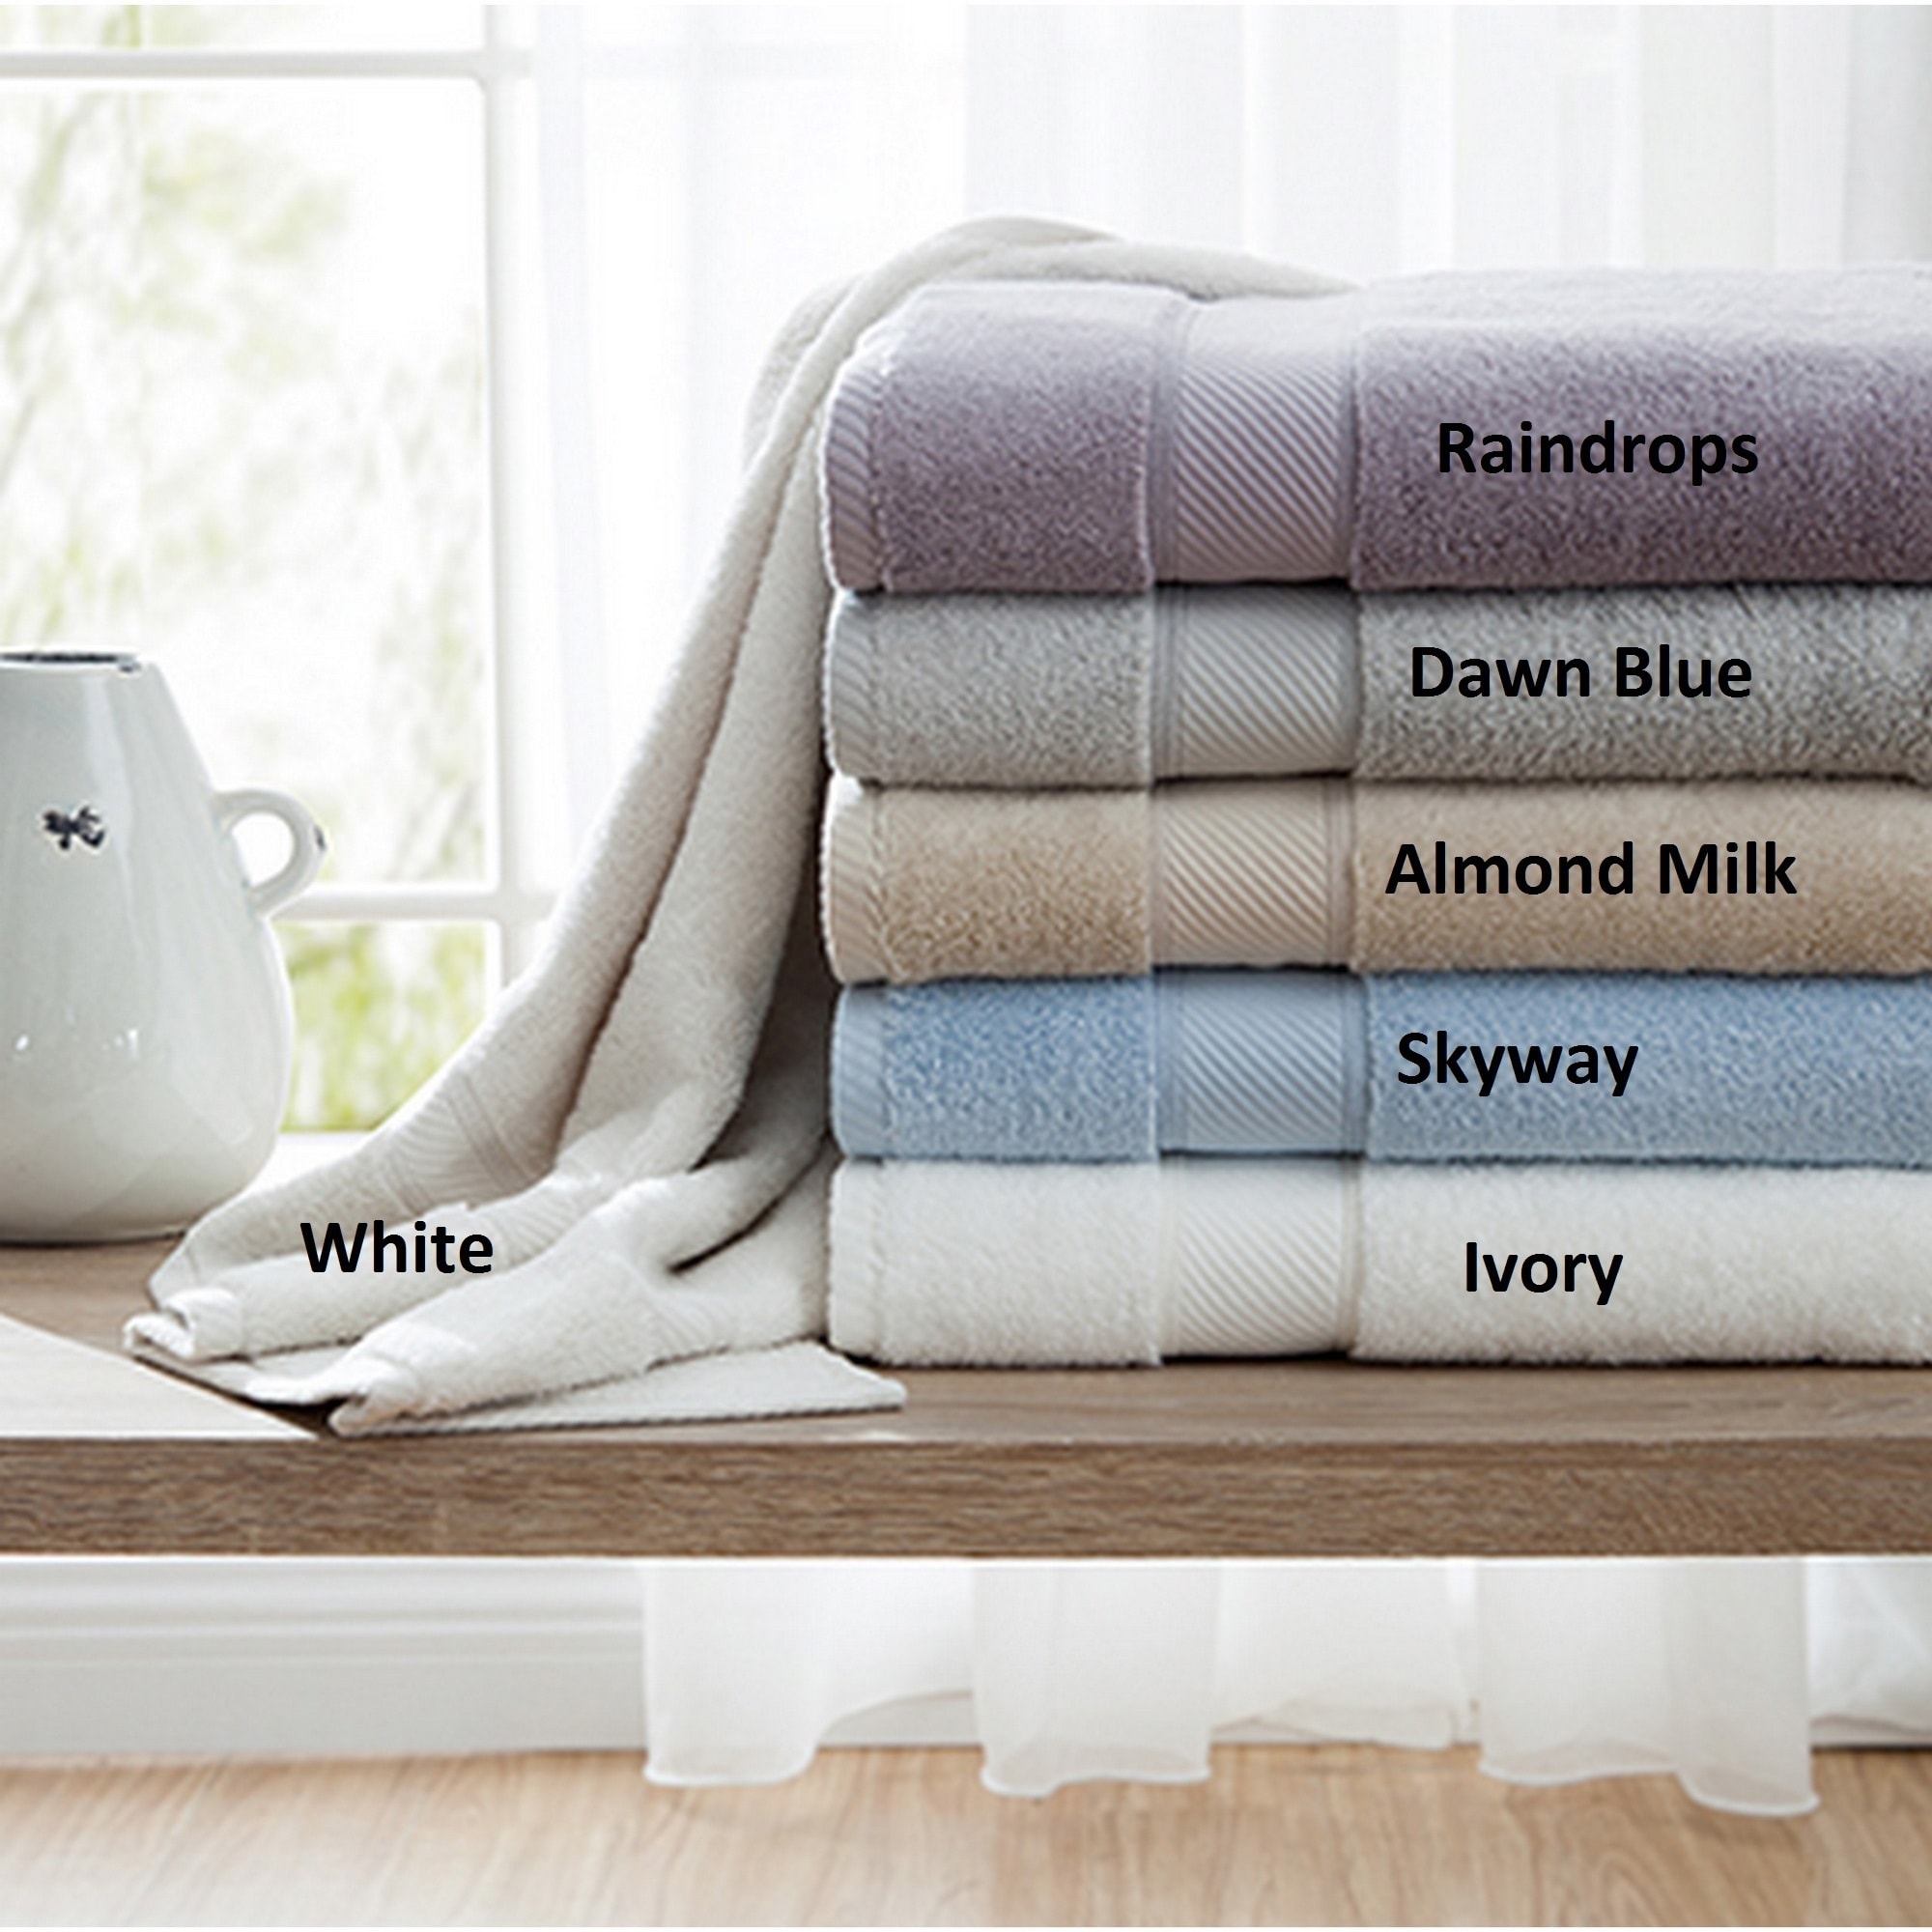 100% Cotton Dish Cloth Wash Cloth Hand Towel Set of 8 or 16